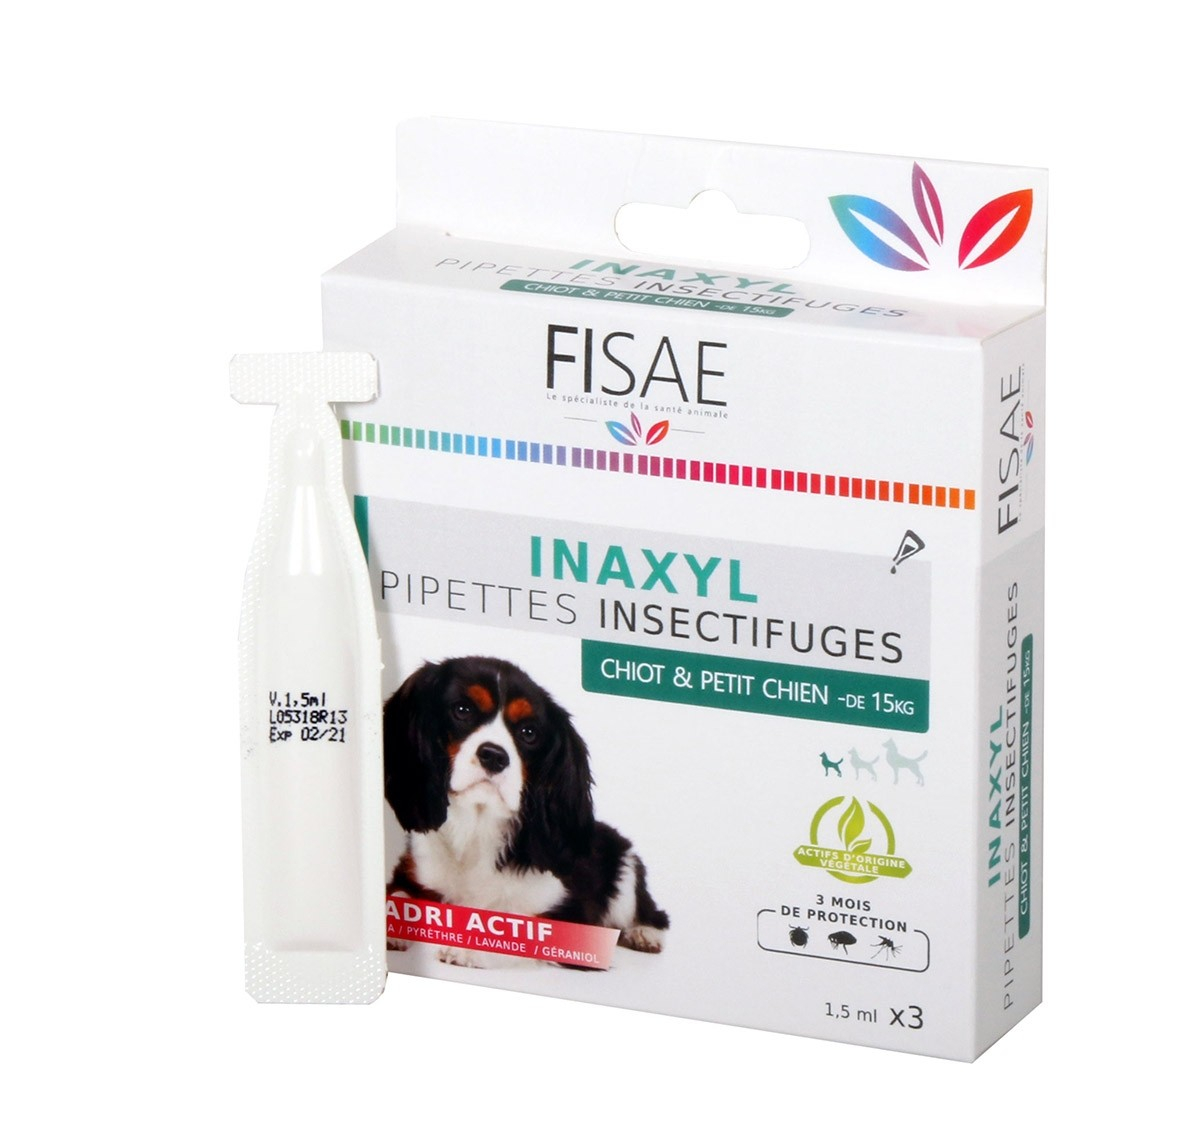 Pipetas repelentes para perro FIASE INAXYL - innovación 4 activos naturales